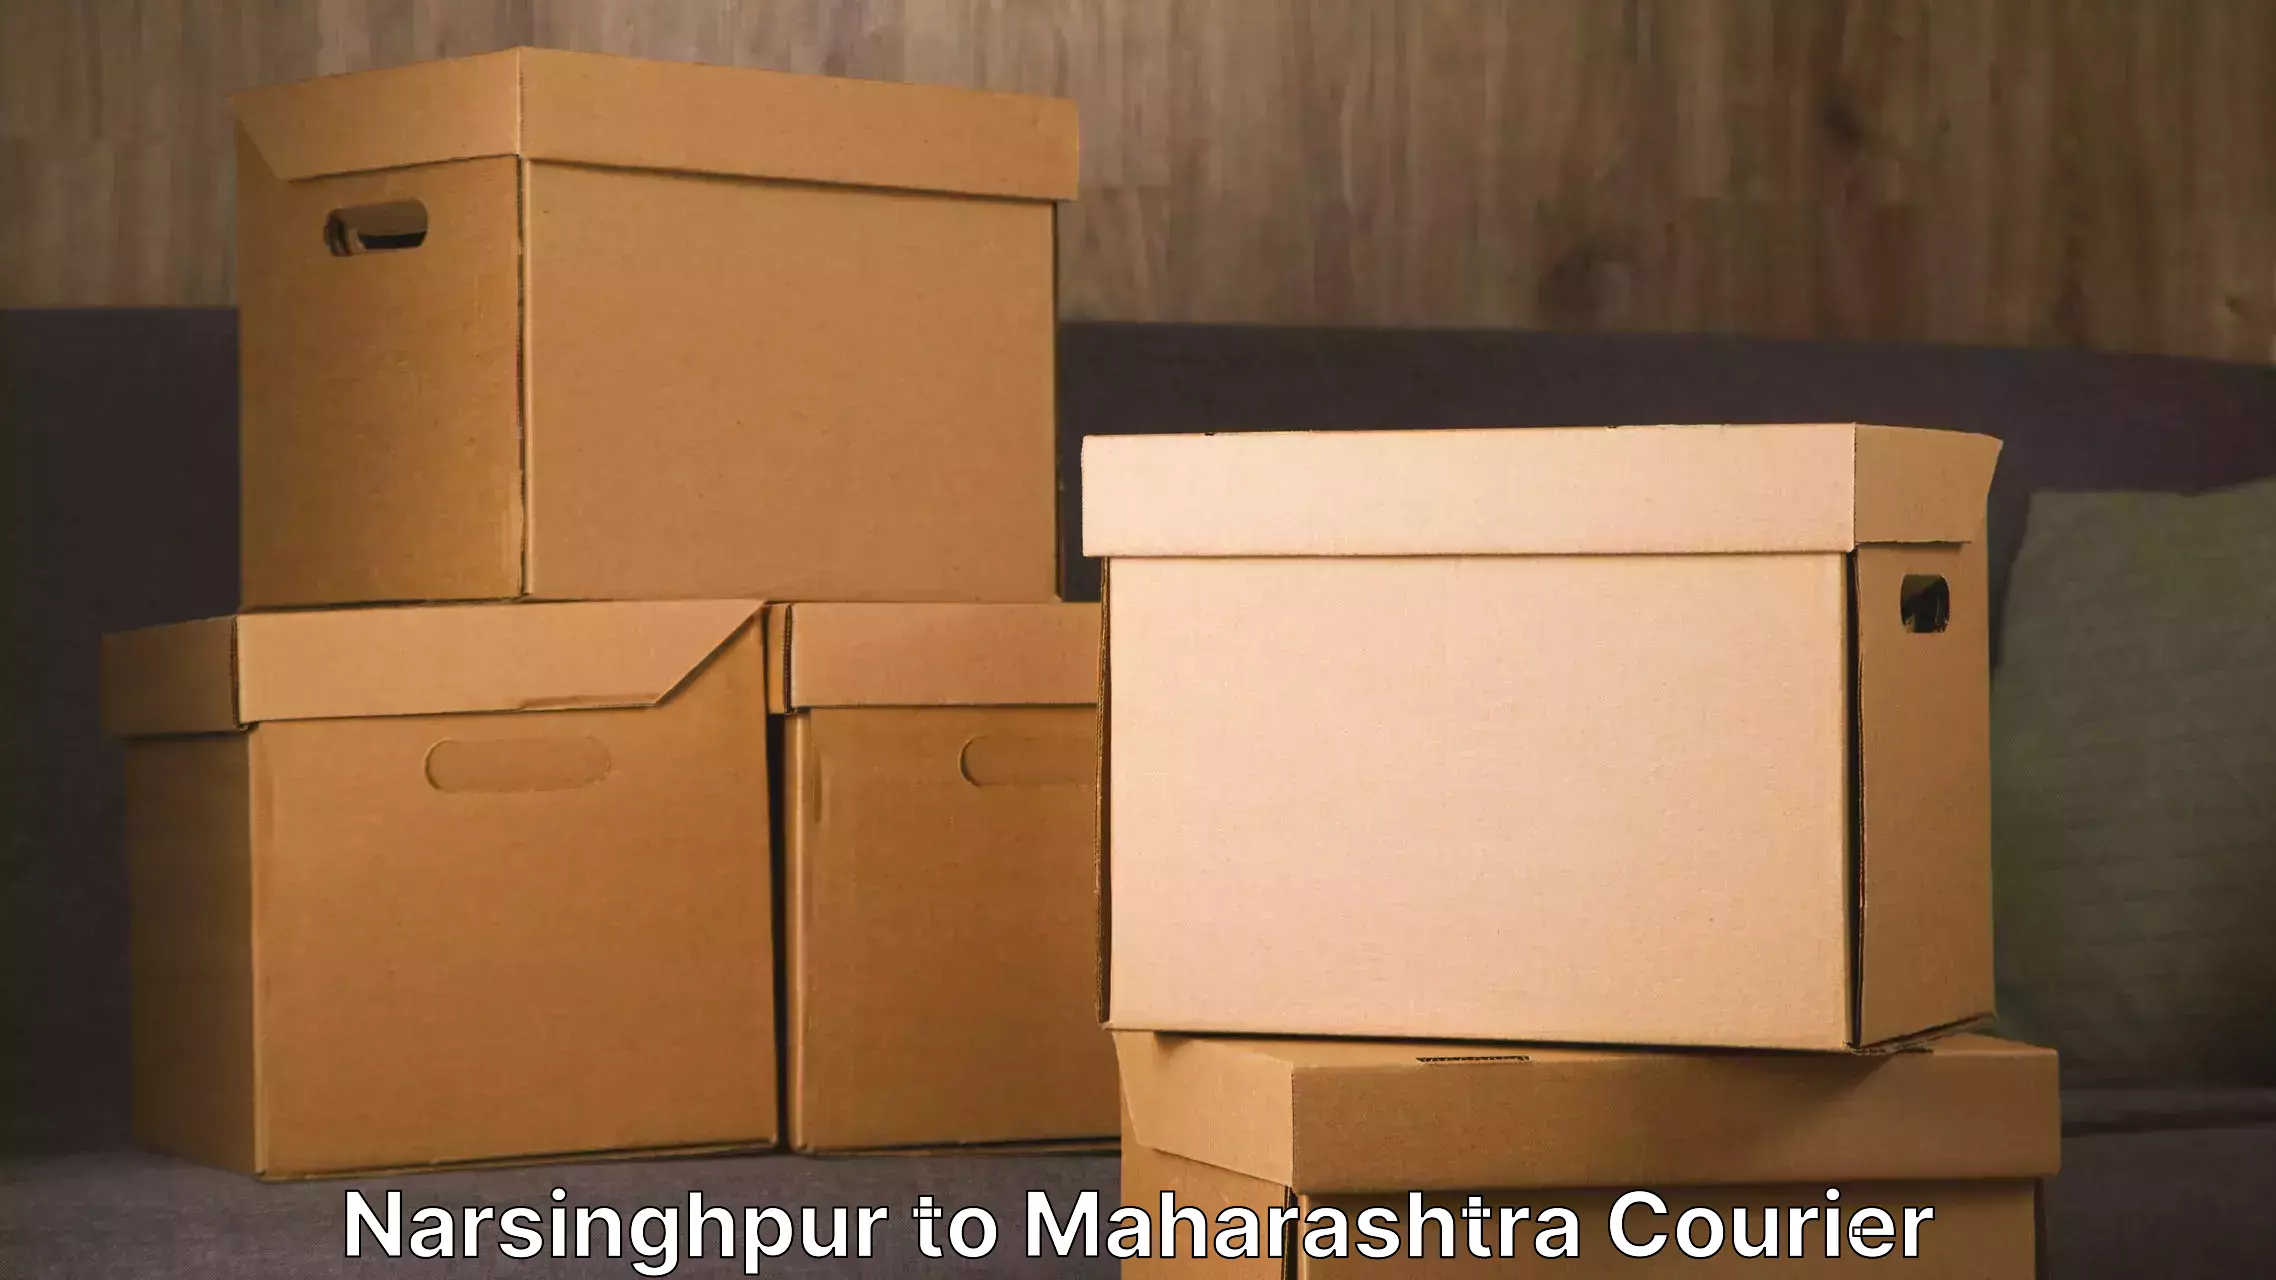 Furniture delivery service Narsinghpur to Yeola